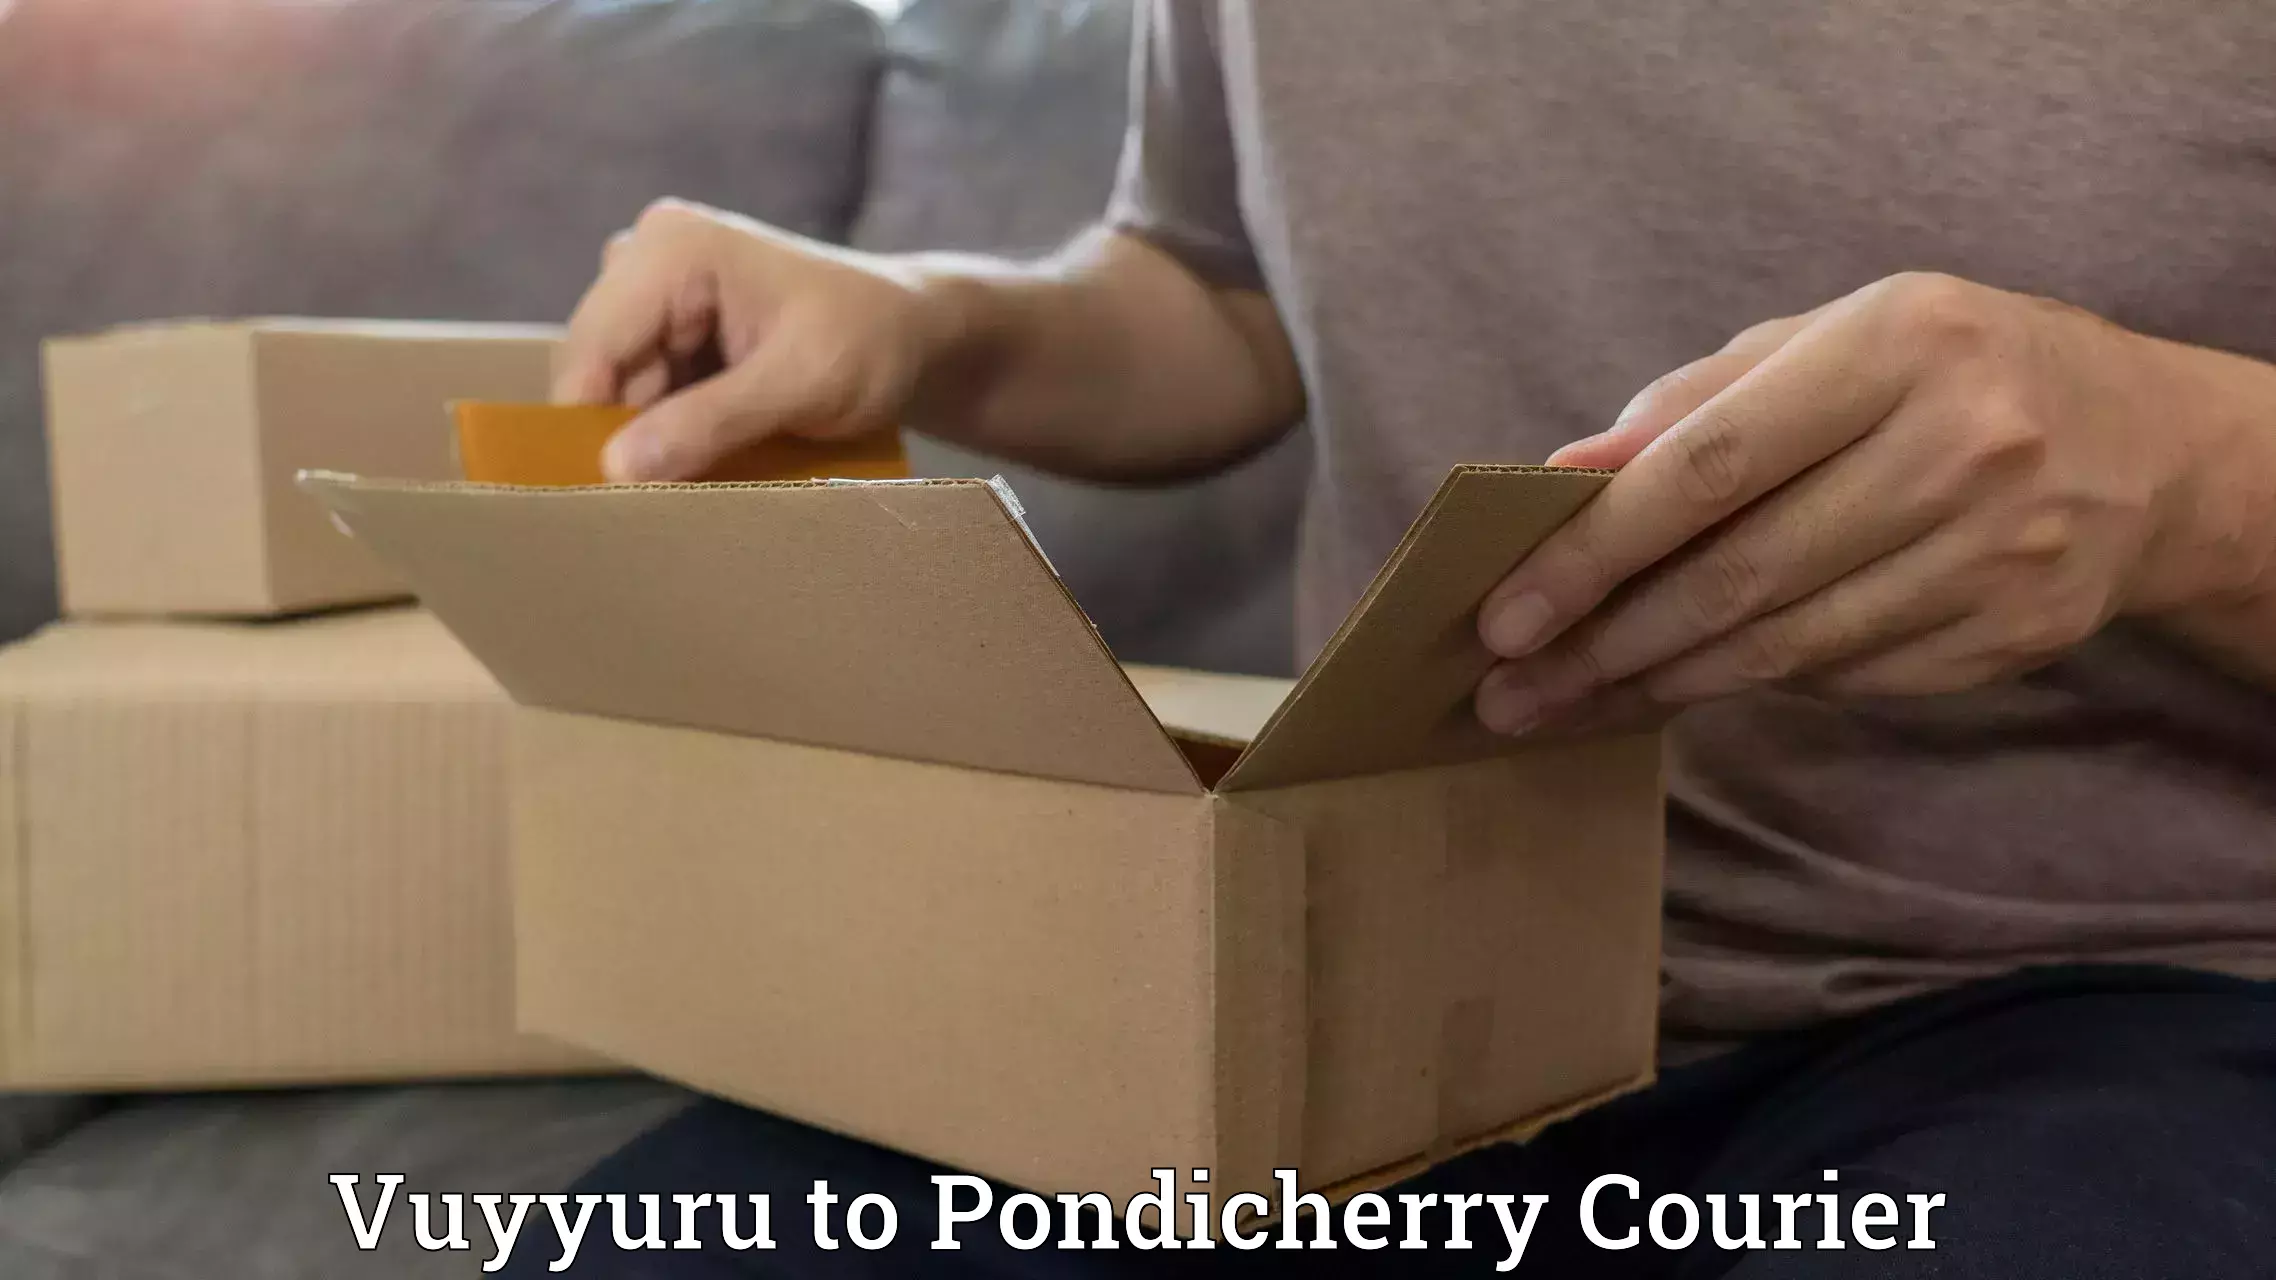 24-hour delivery options Vuyyuru to Pondicherry